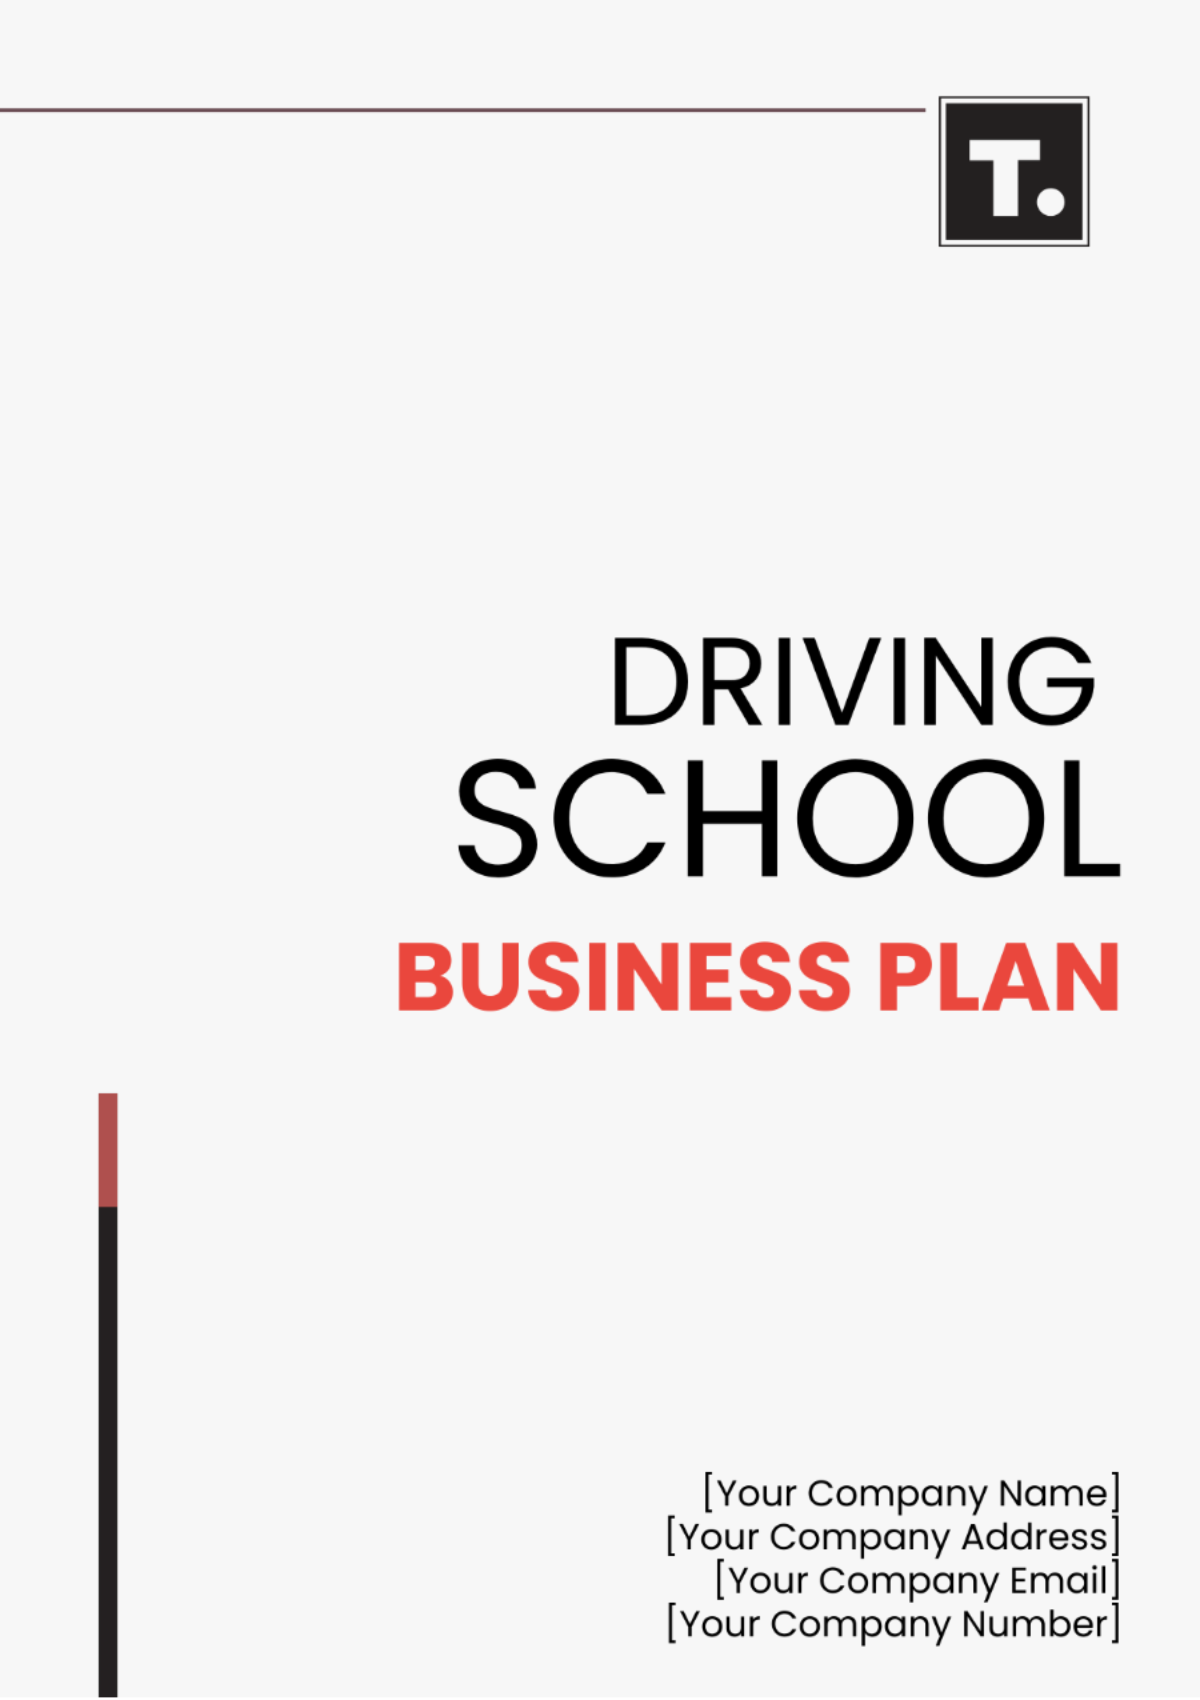 Driving School Business Plan Template